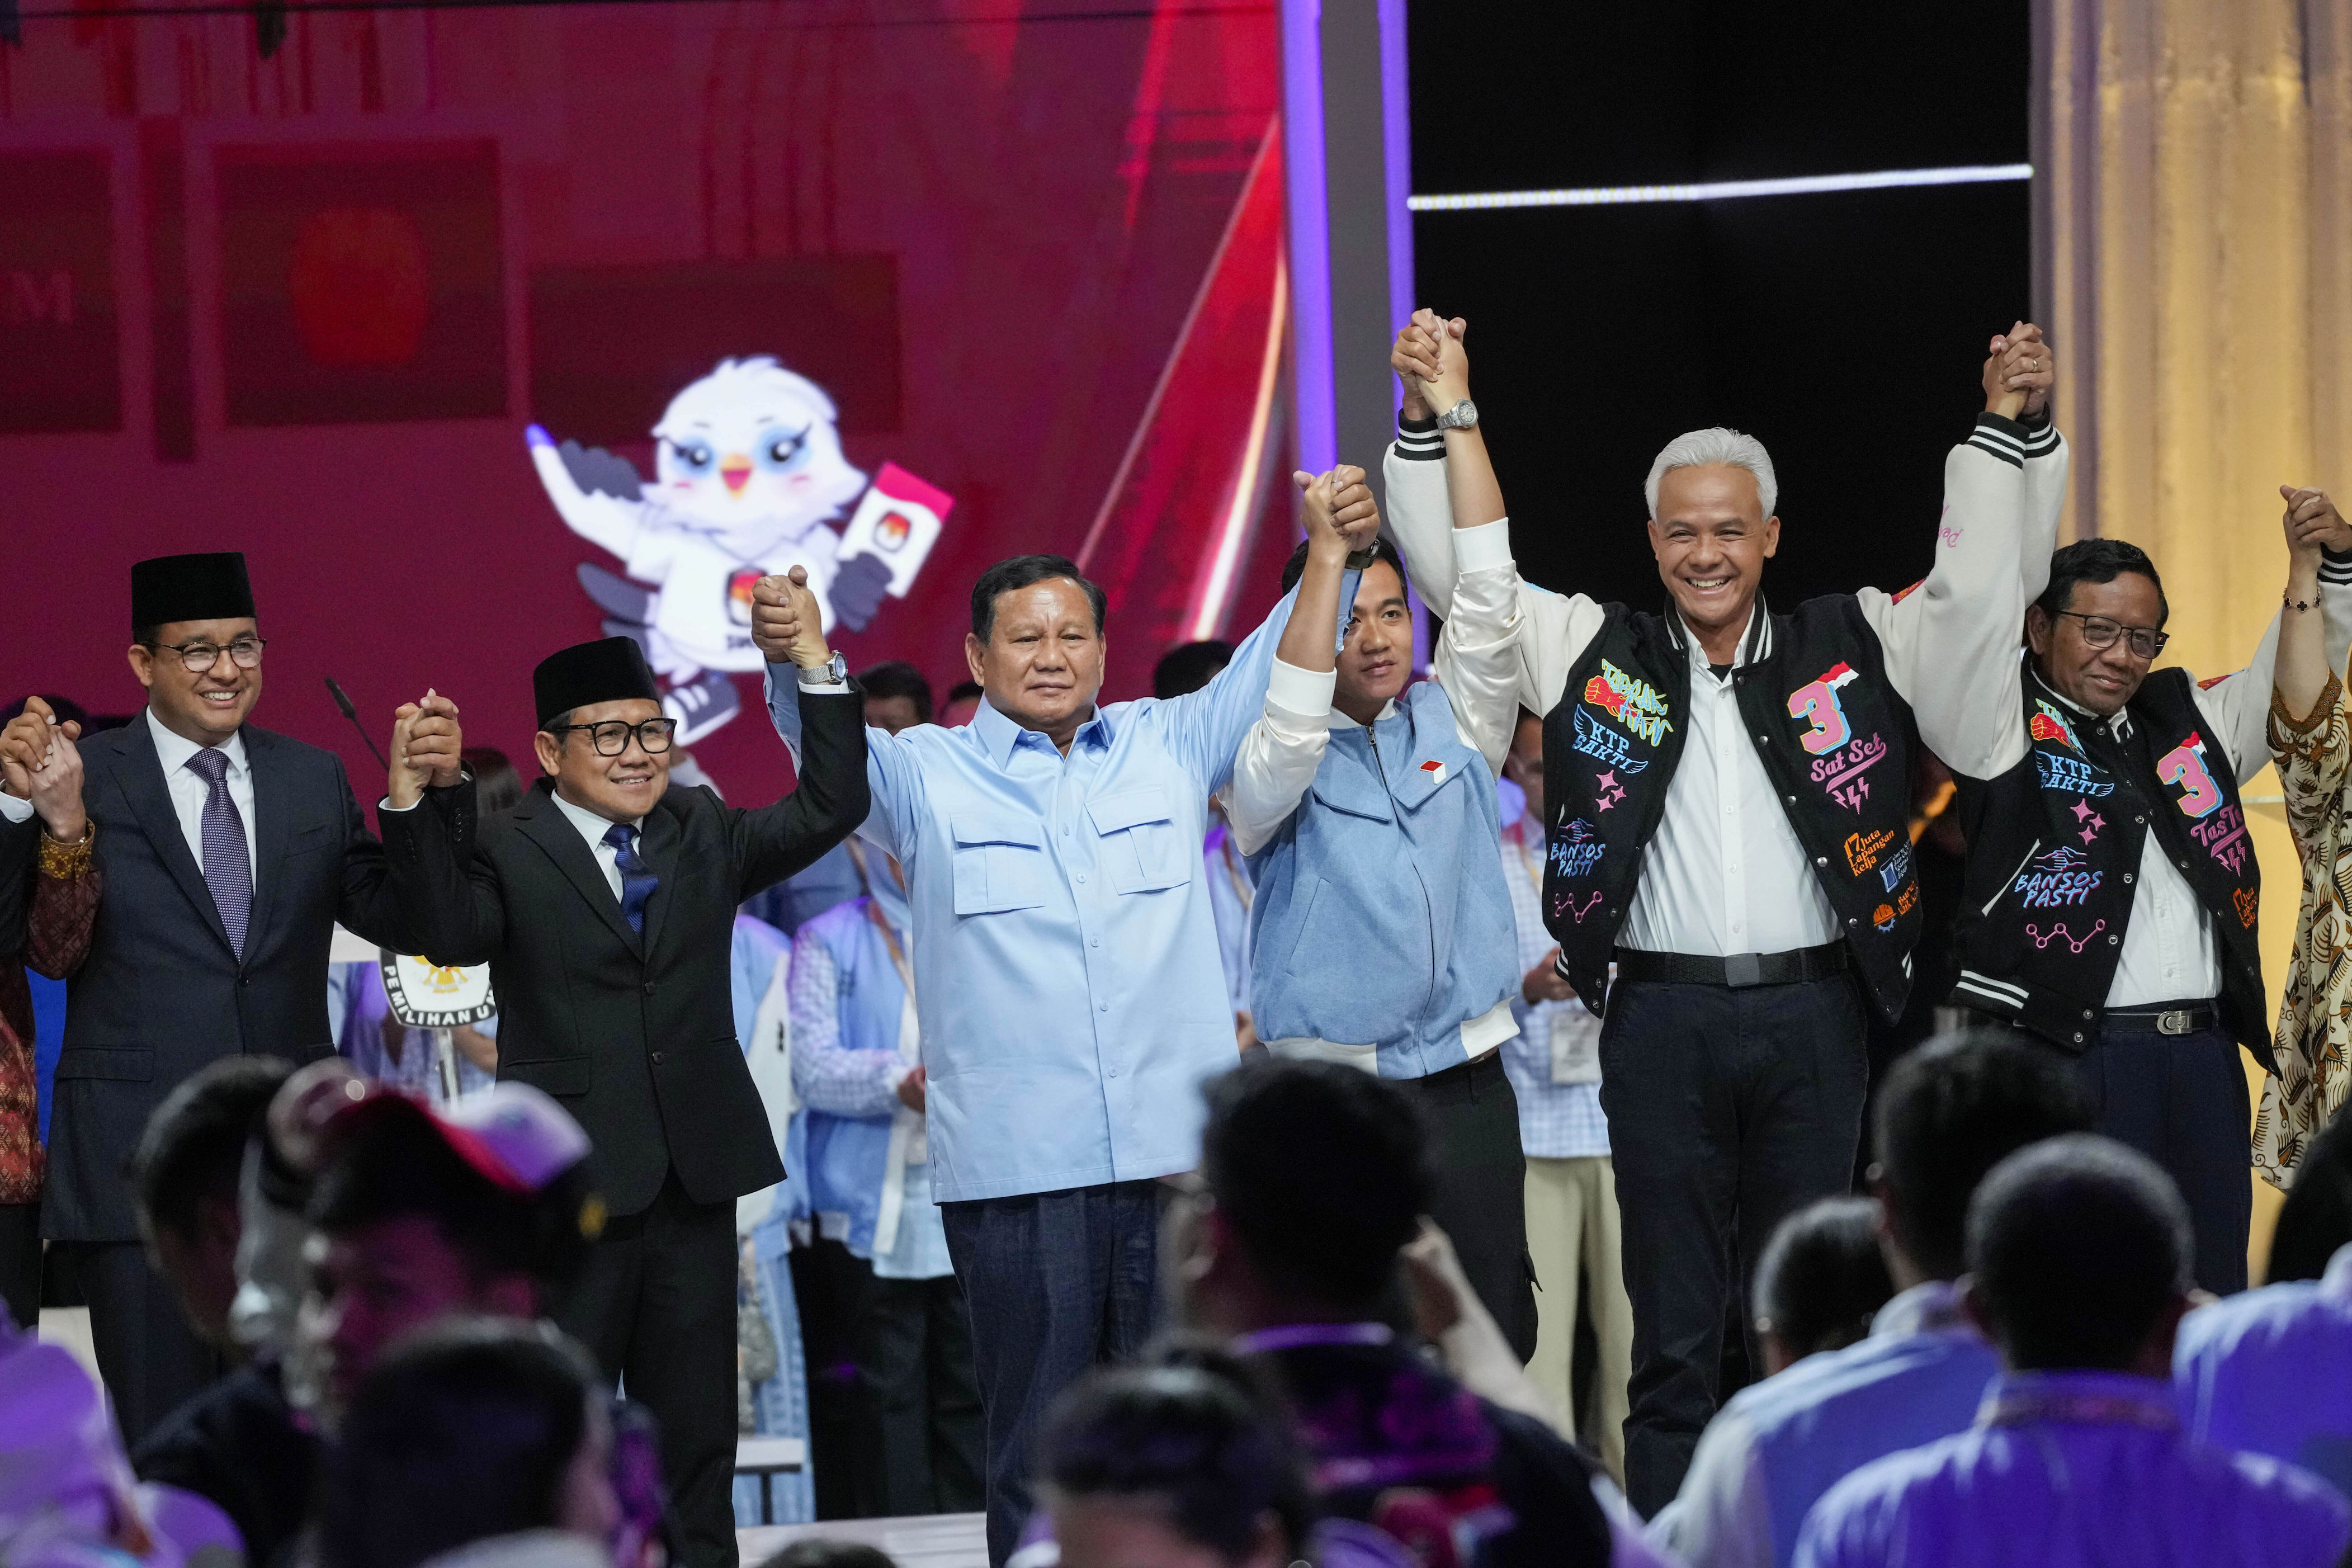 tiktok-bestefar med blodig fortid ligger best an foran valget i indonesia